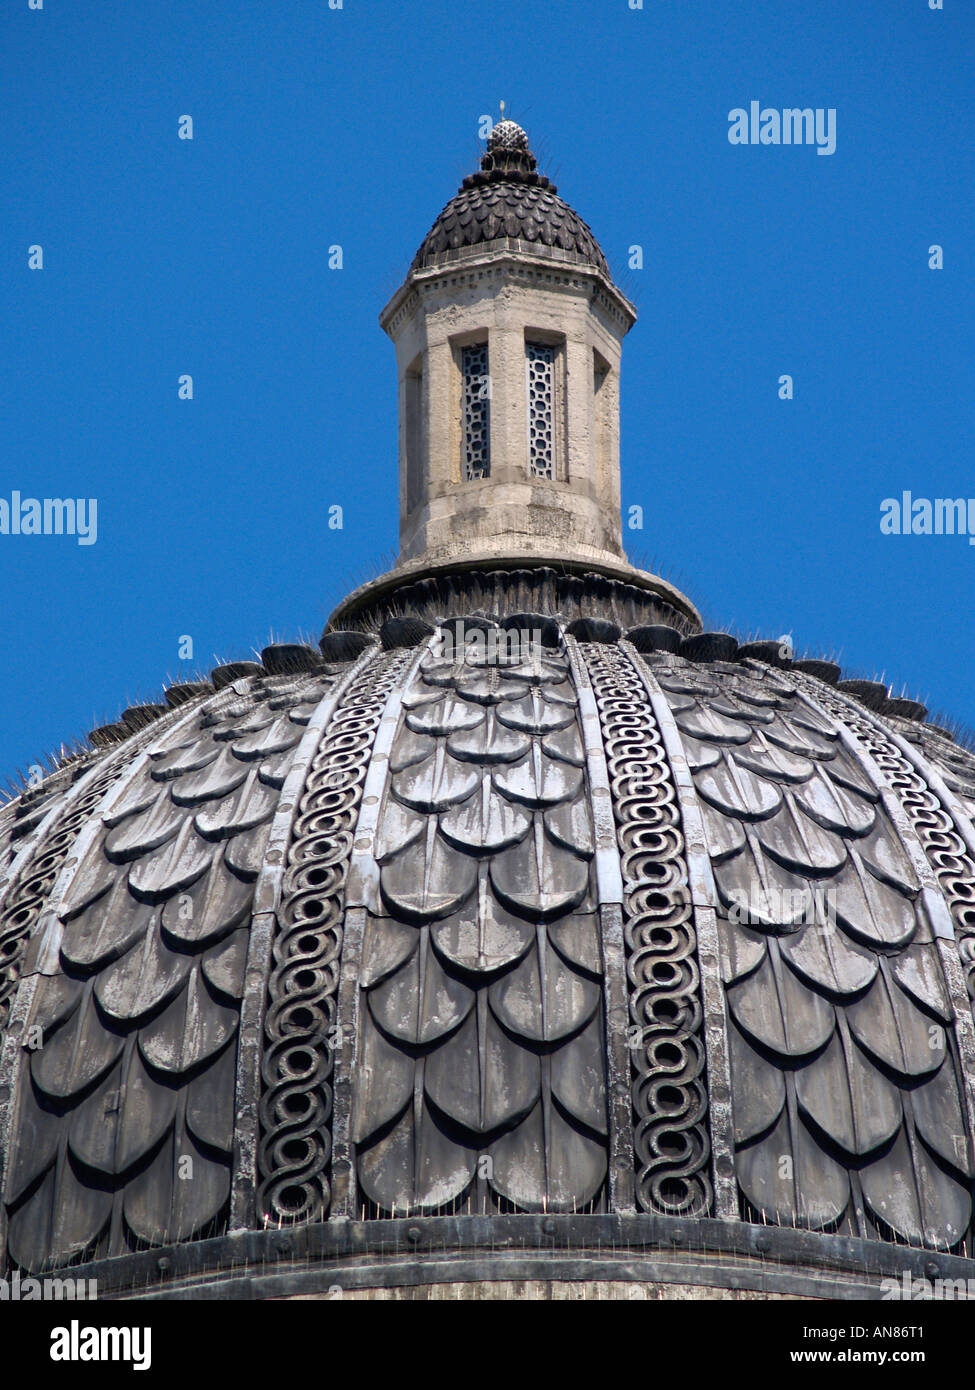 Cupola of the National Gallery Trafalgar Square London UK united Kingdom GB Stock Photo